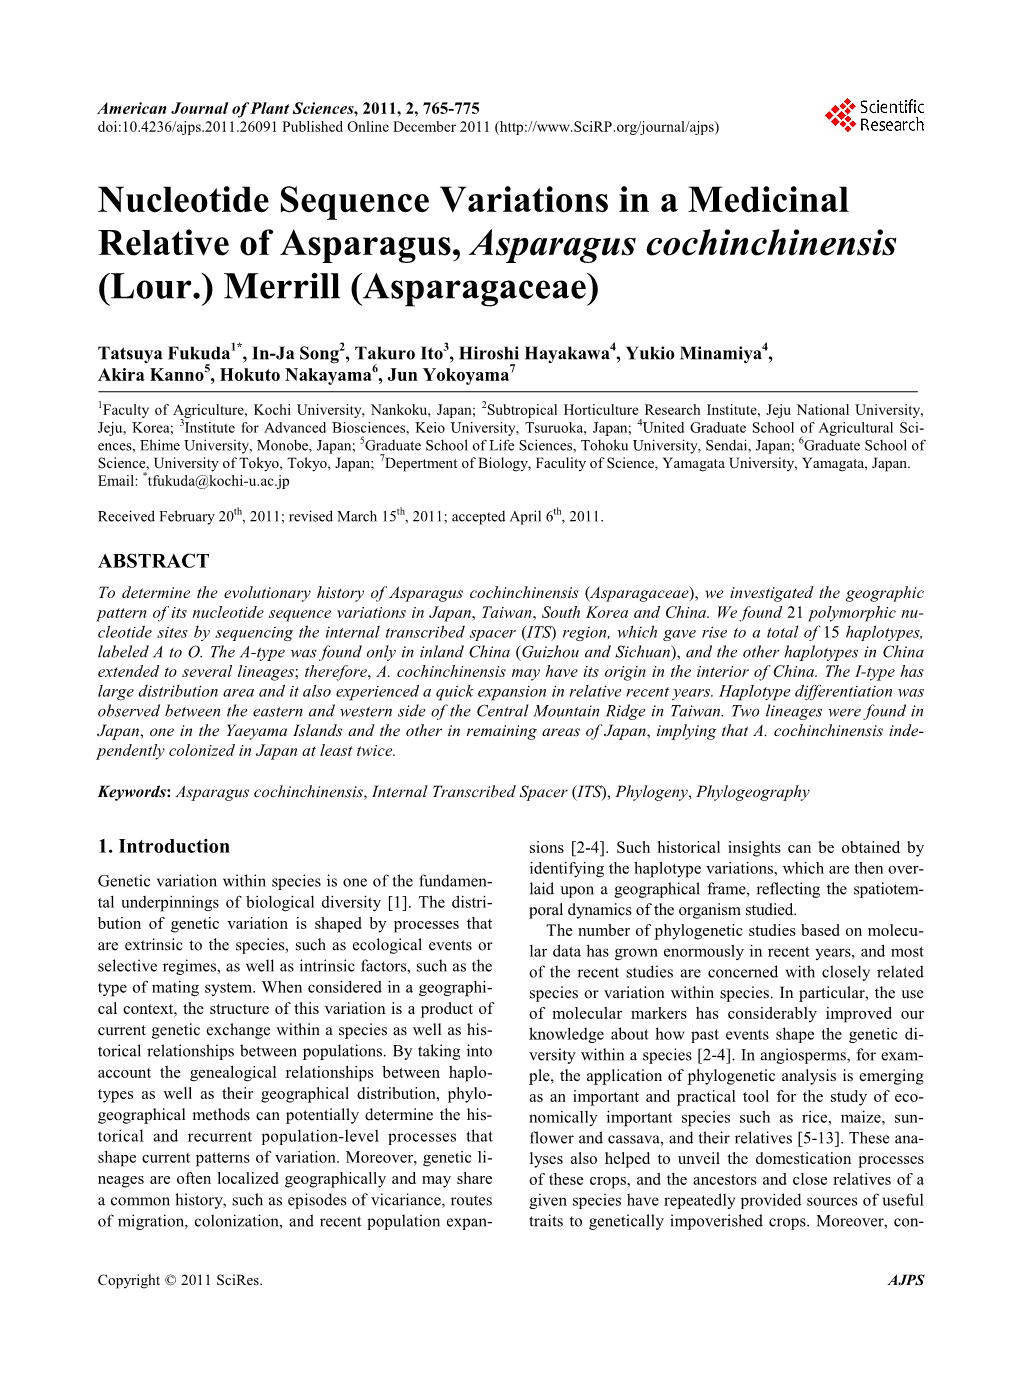 Nucleotide Sequence Variations in a Medicinal Relative of Asparagus, Asparagus Cochinchinensis (Lour.) Merrill (Asparagaceae)